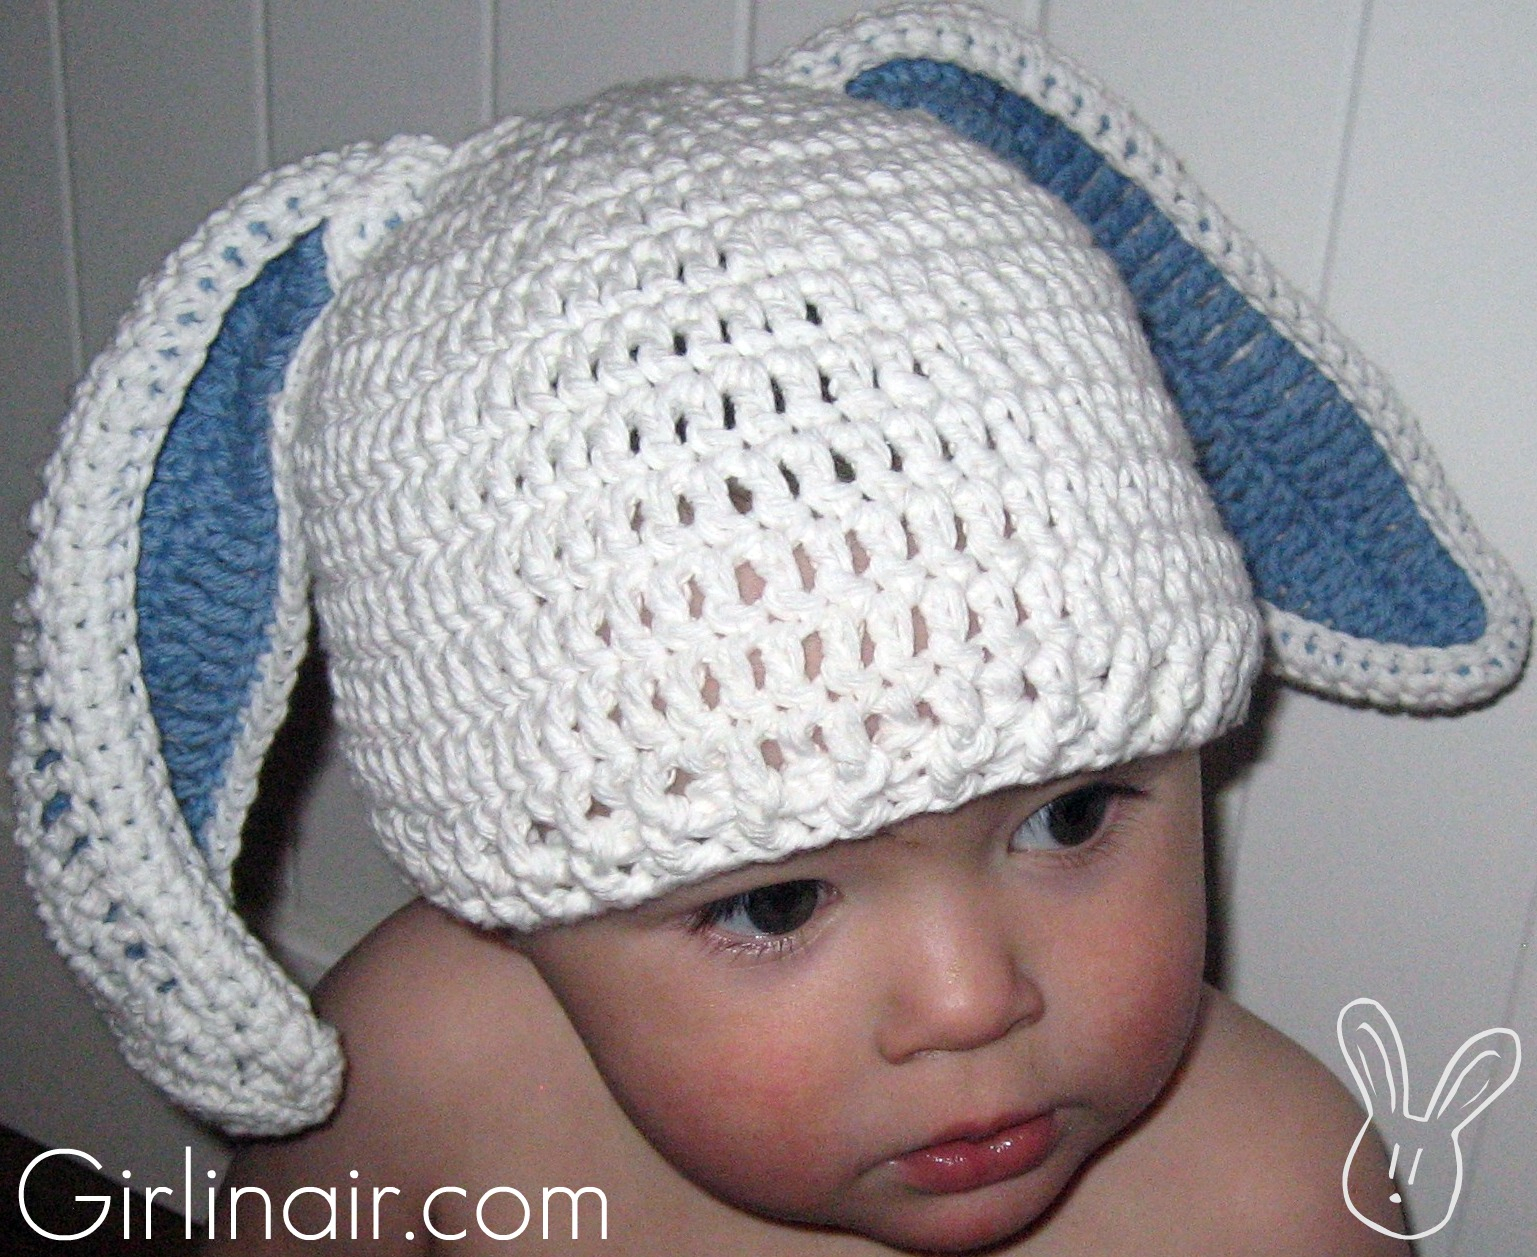 Knit Baby Bunny Hat Pattern Girl In Air Blog Floppy Bunny Hat Pattern